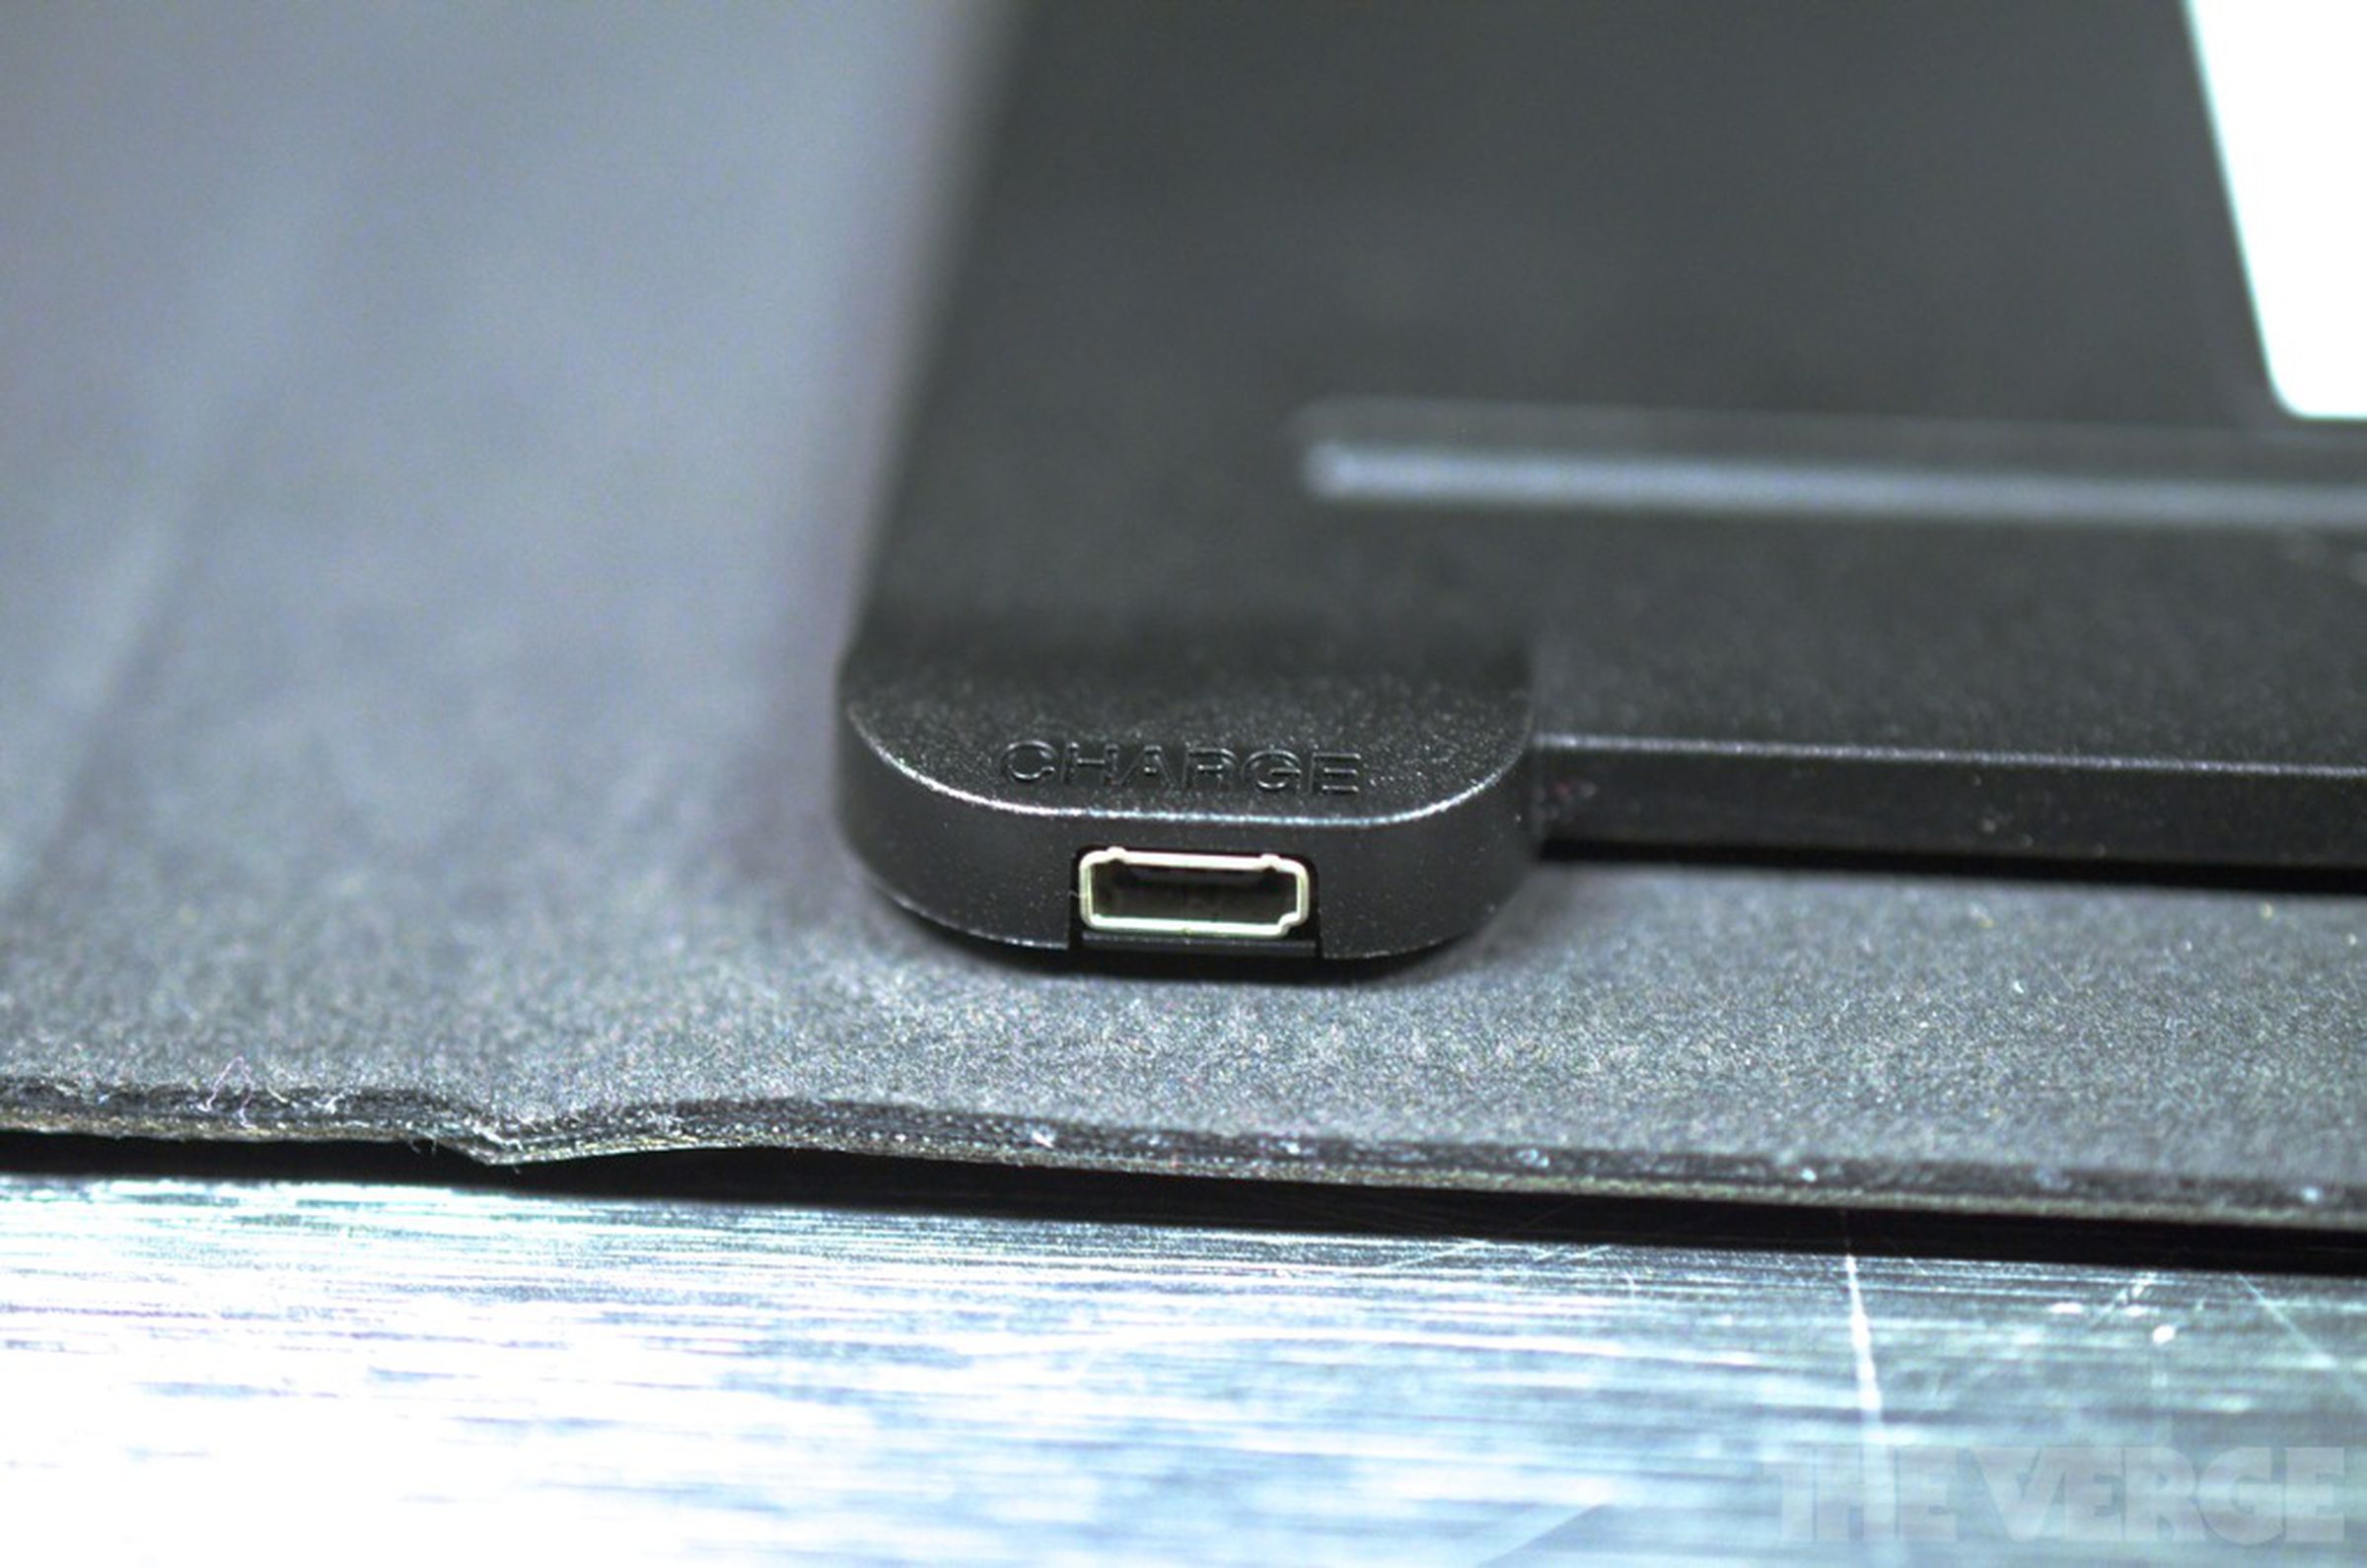 Sony Tablet S keyboard case hands-on